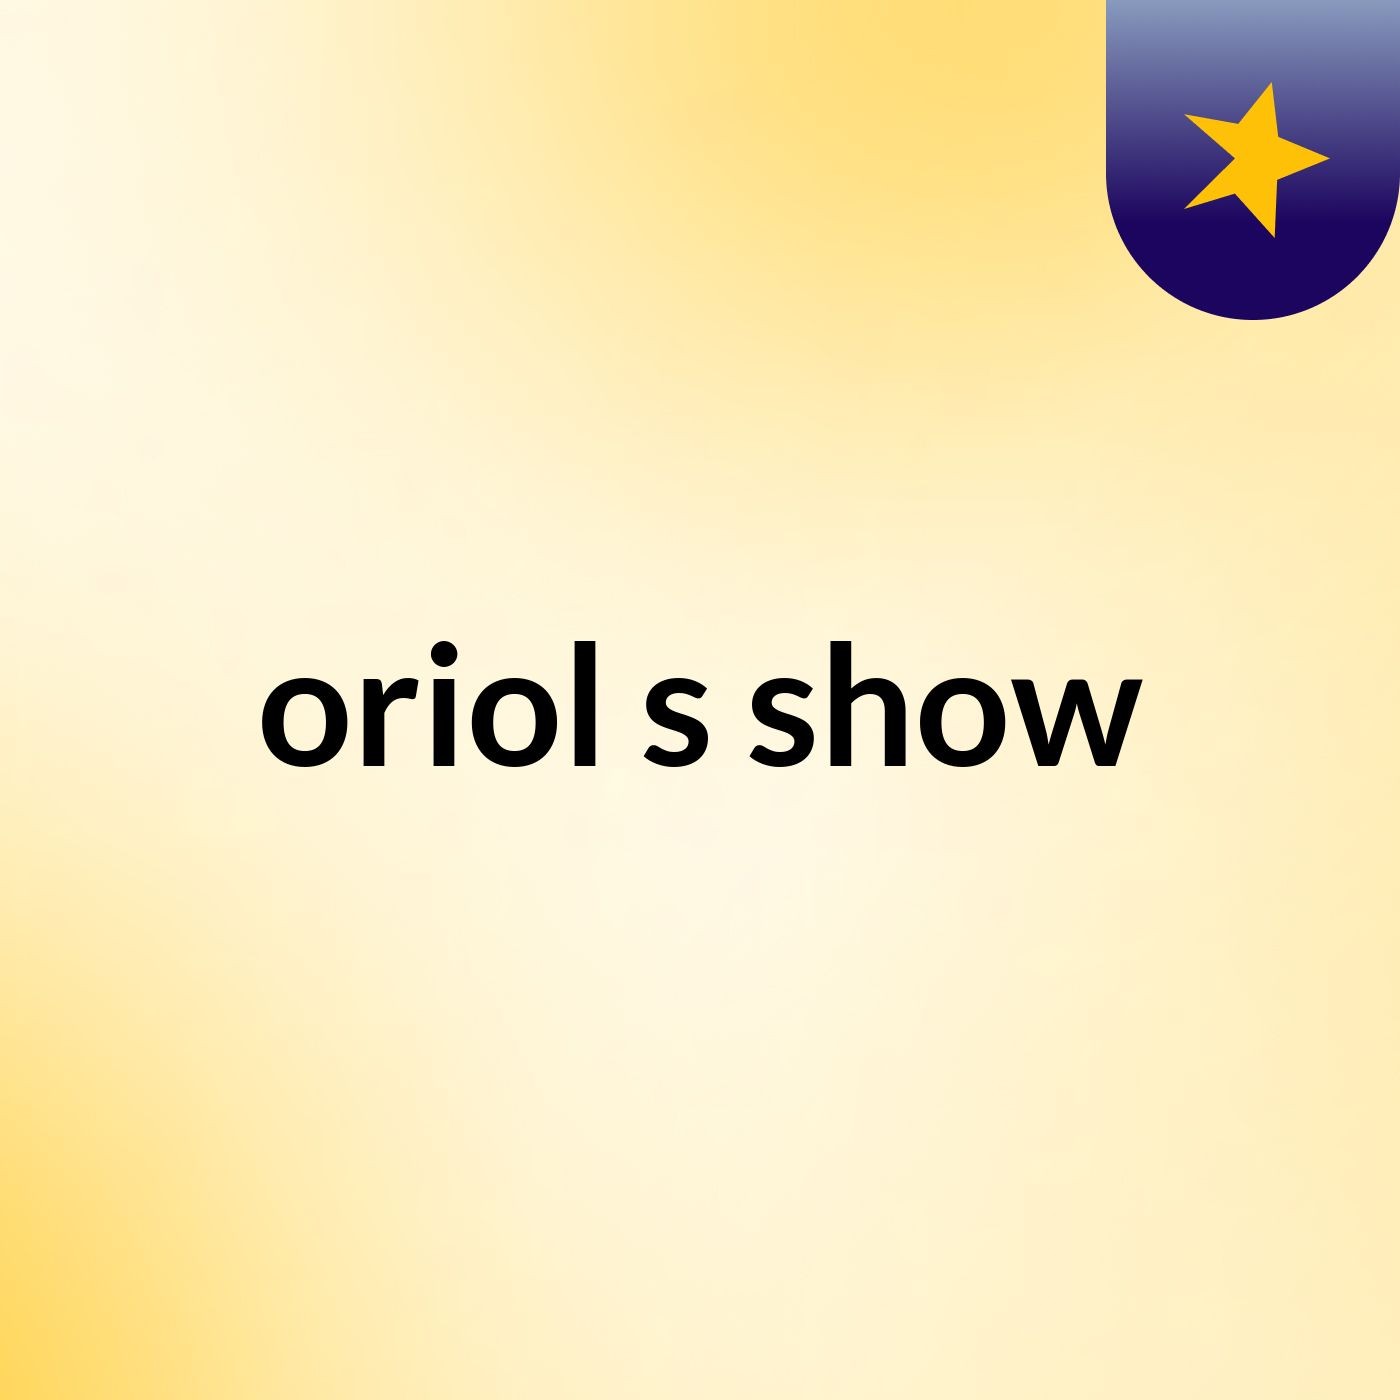 oriol's show